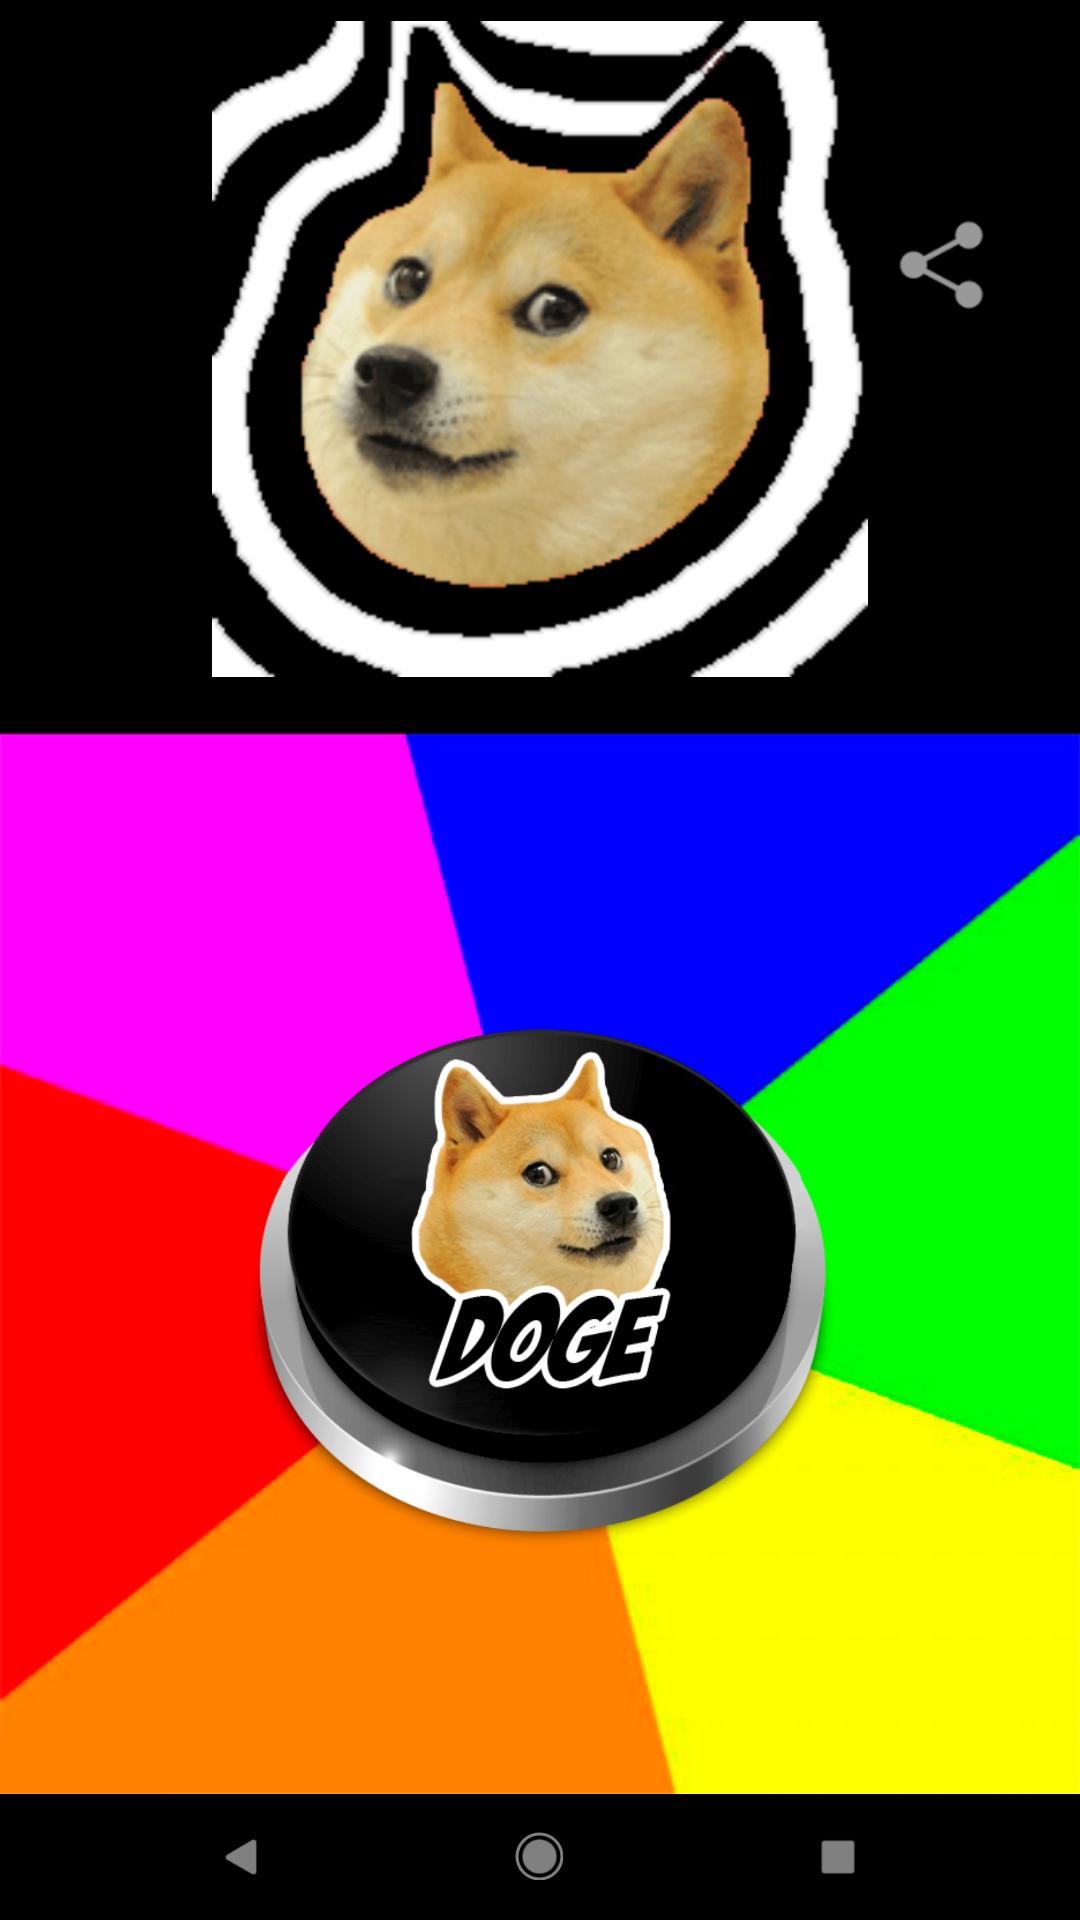 Doge Meme For Android Apk Download